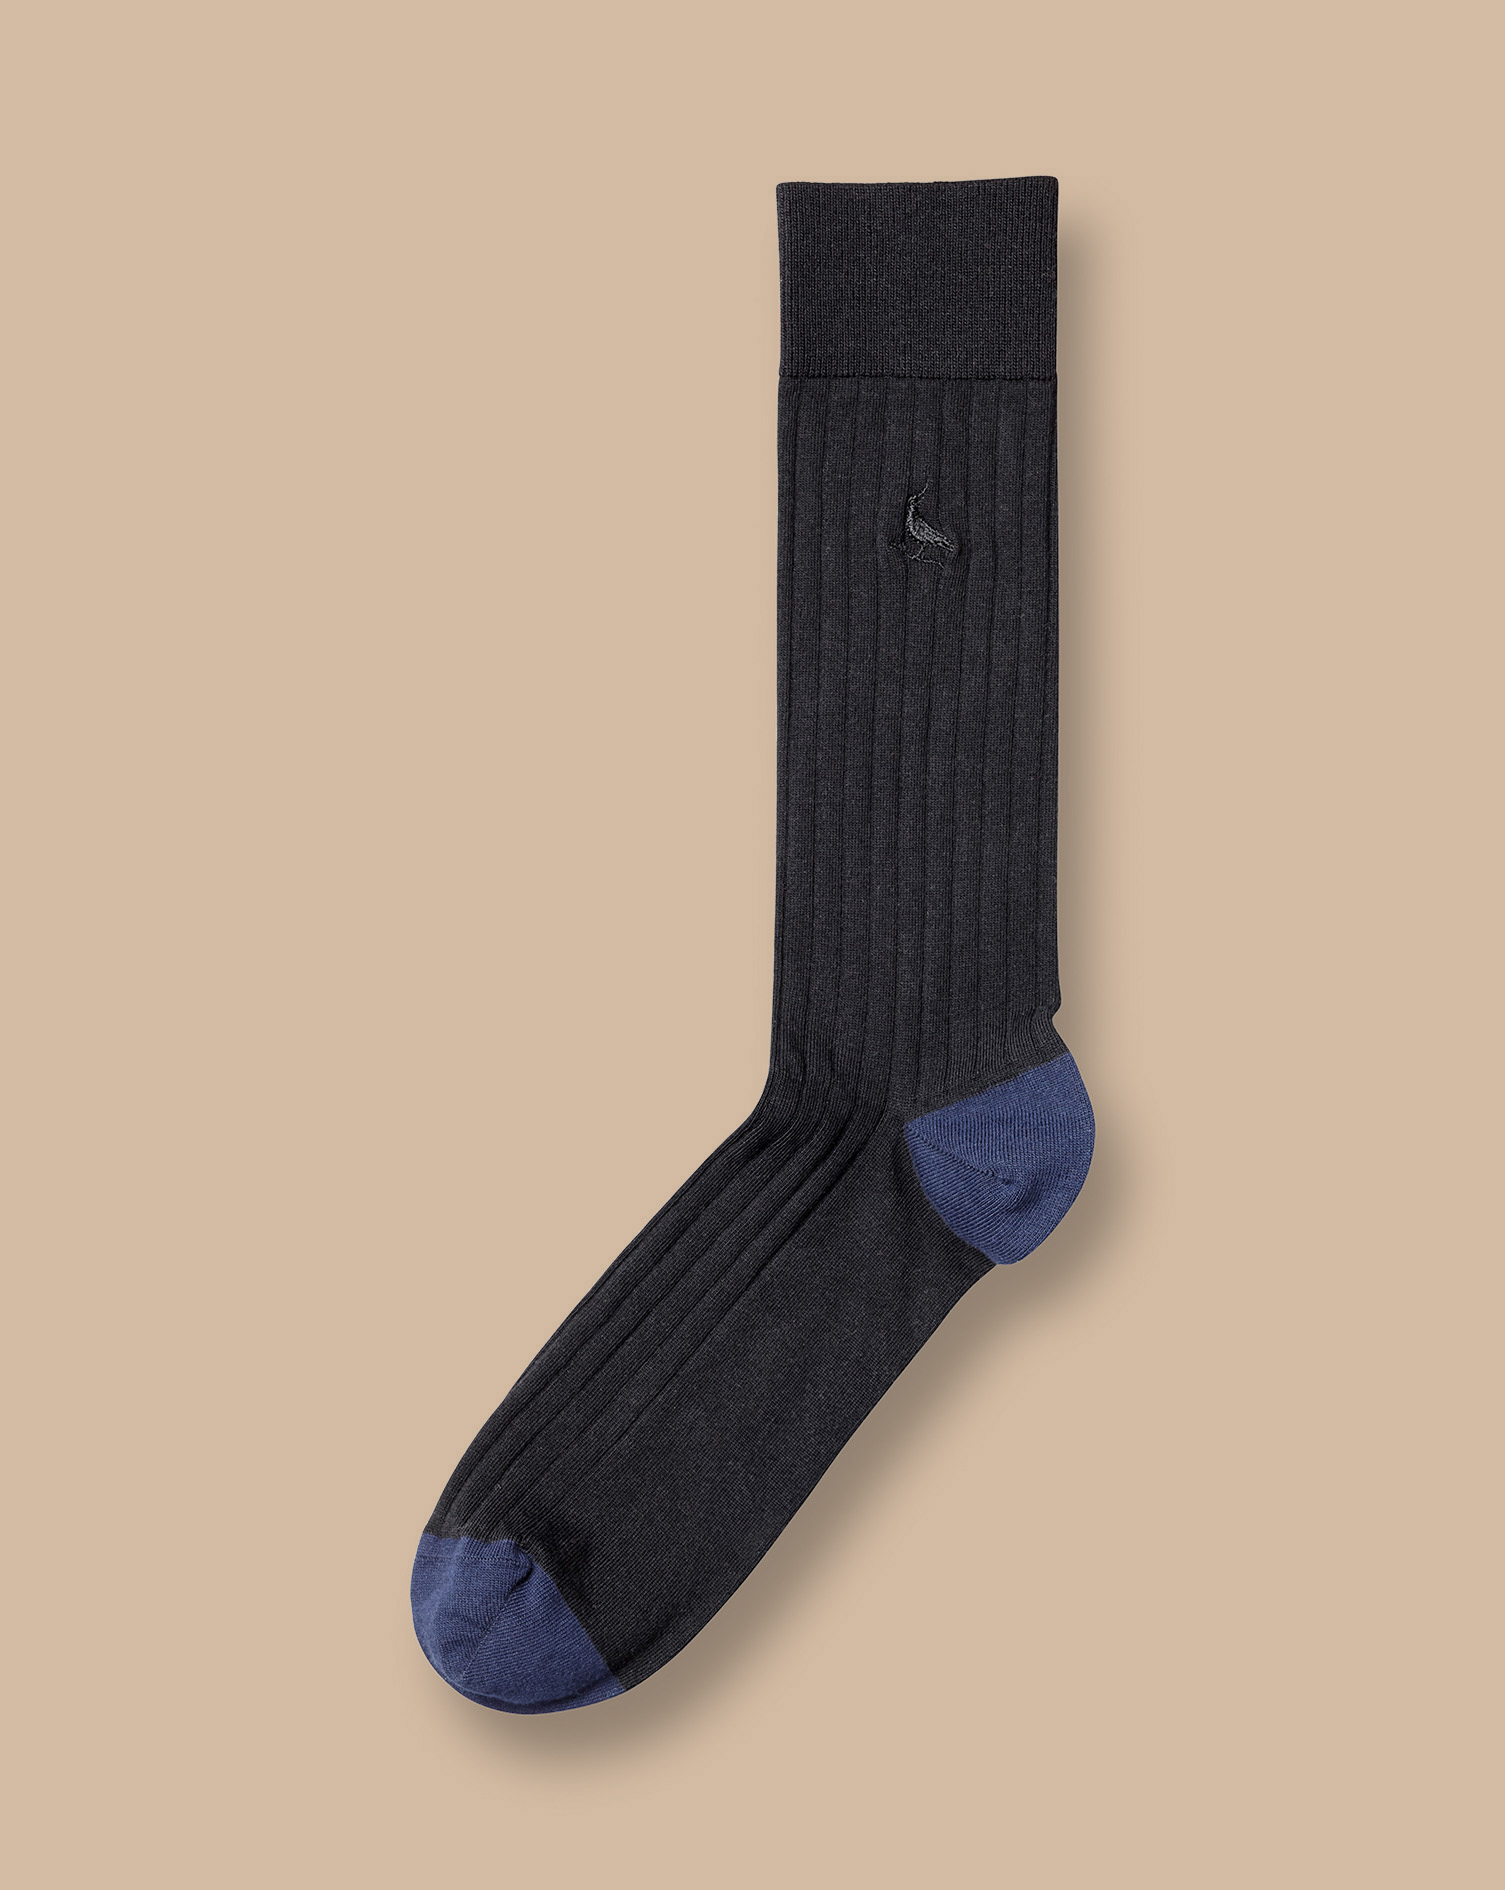 Cotton Rib Socks - Black Size 10.5-13
